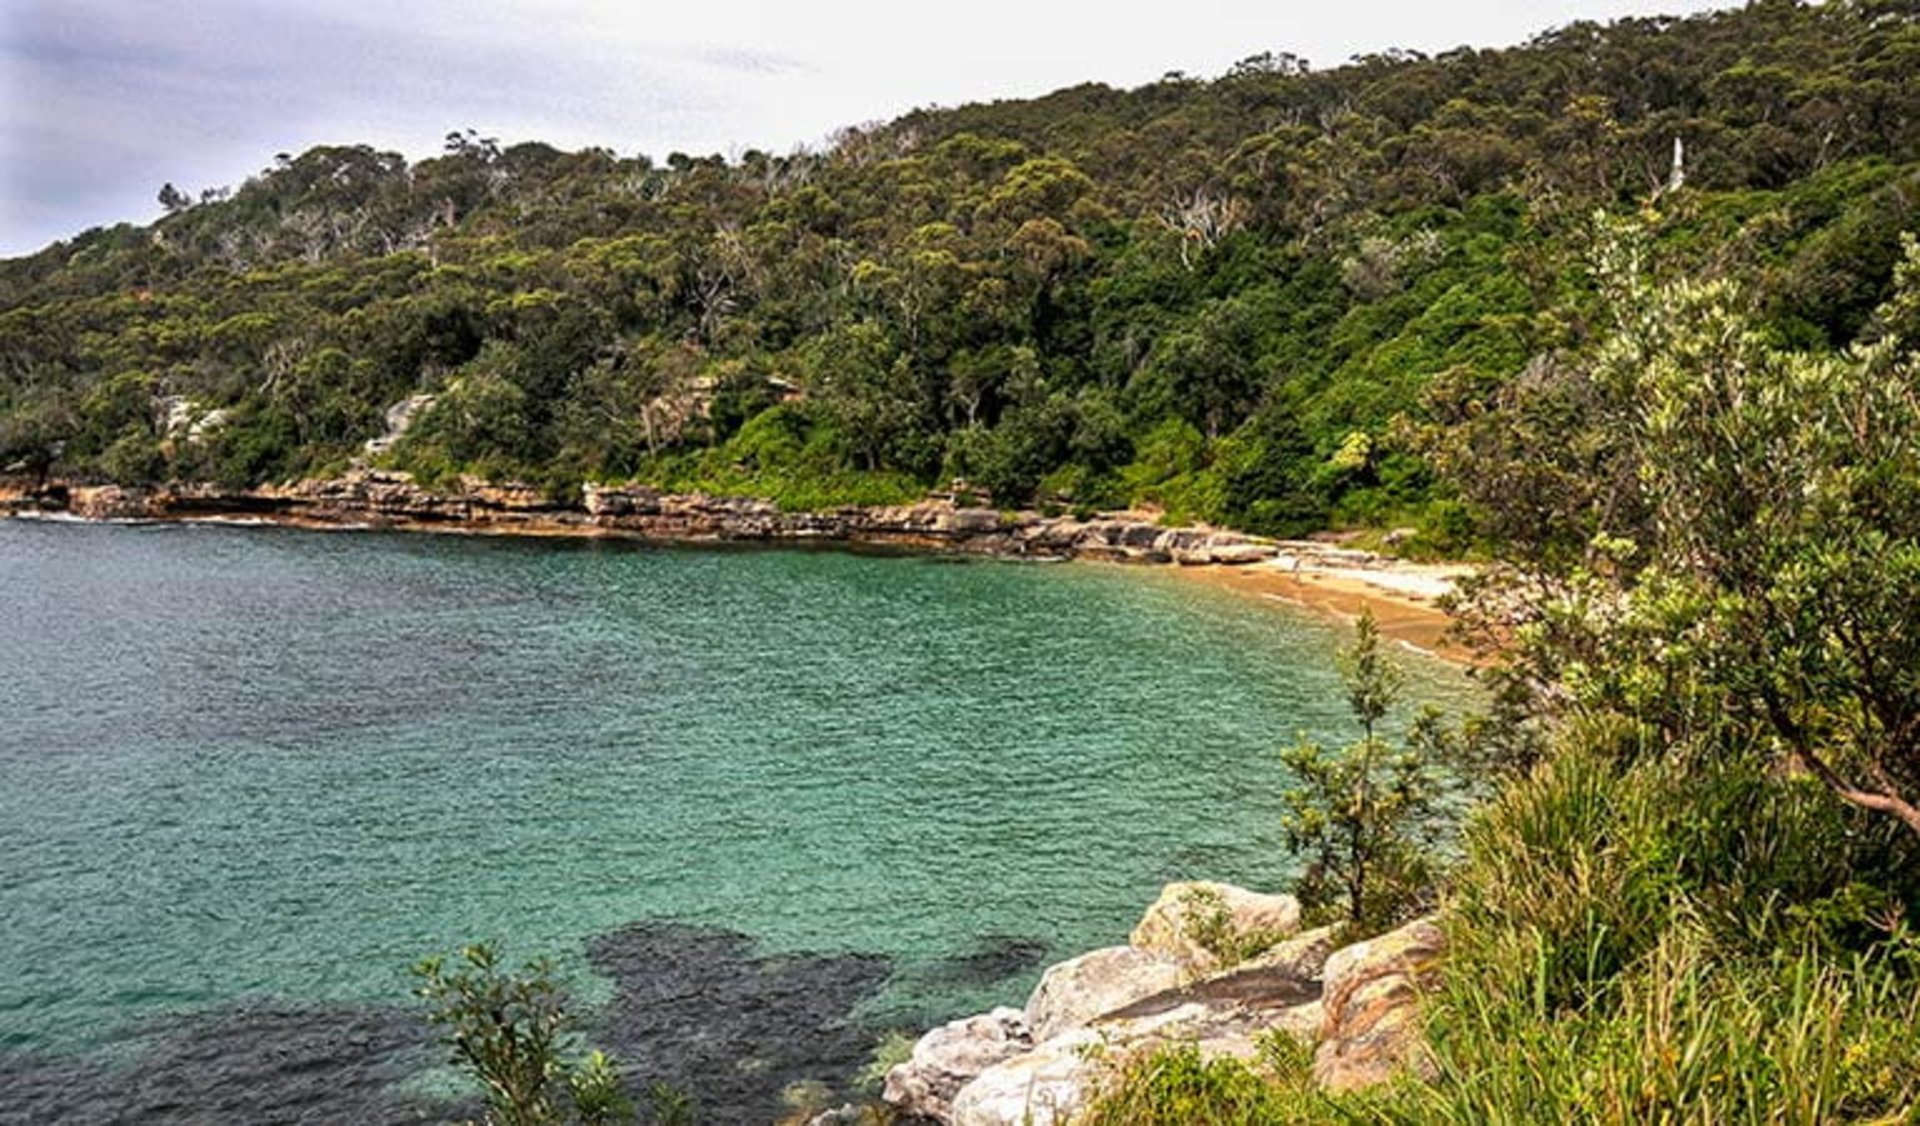 The best nudist beach in sydney, australia